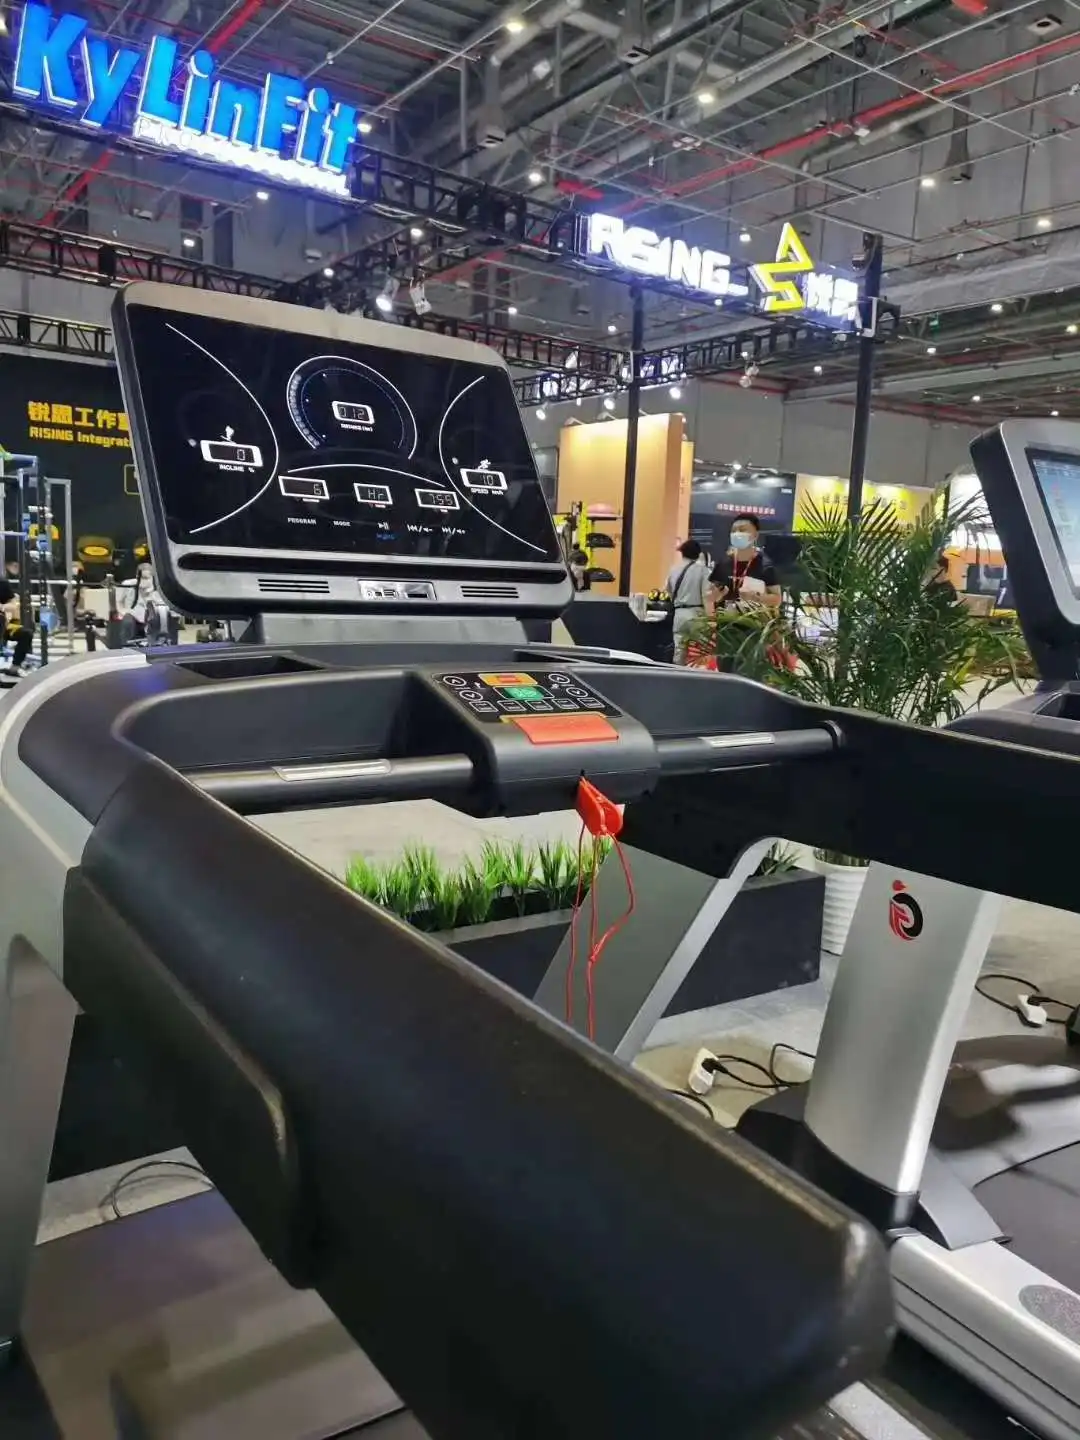 2021 ac motor sled combo treadmill gym equipment